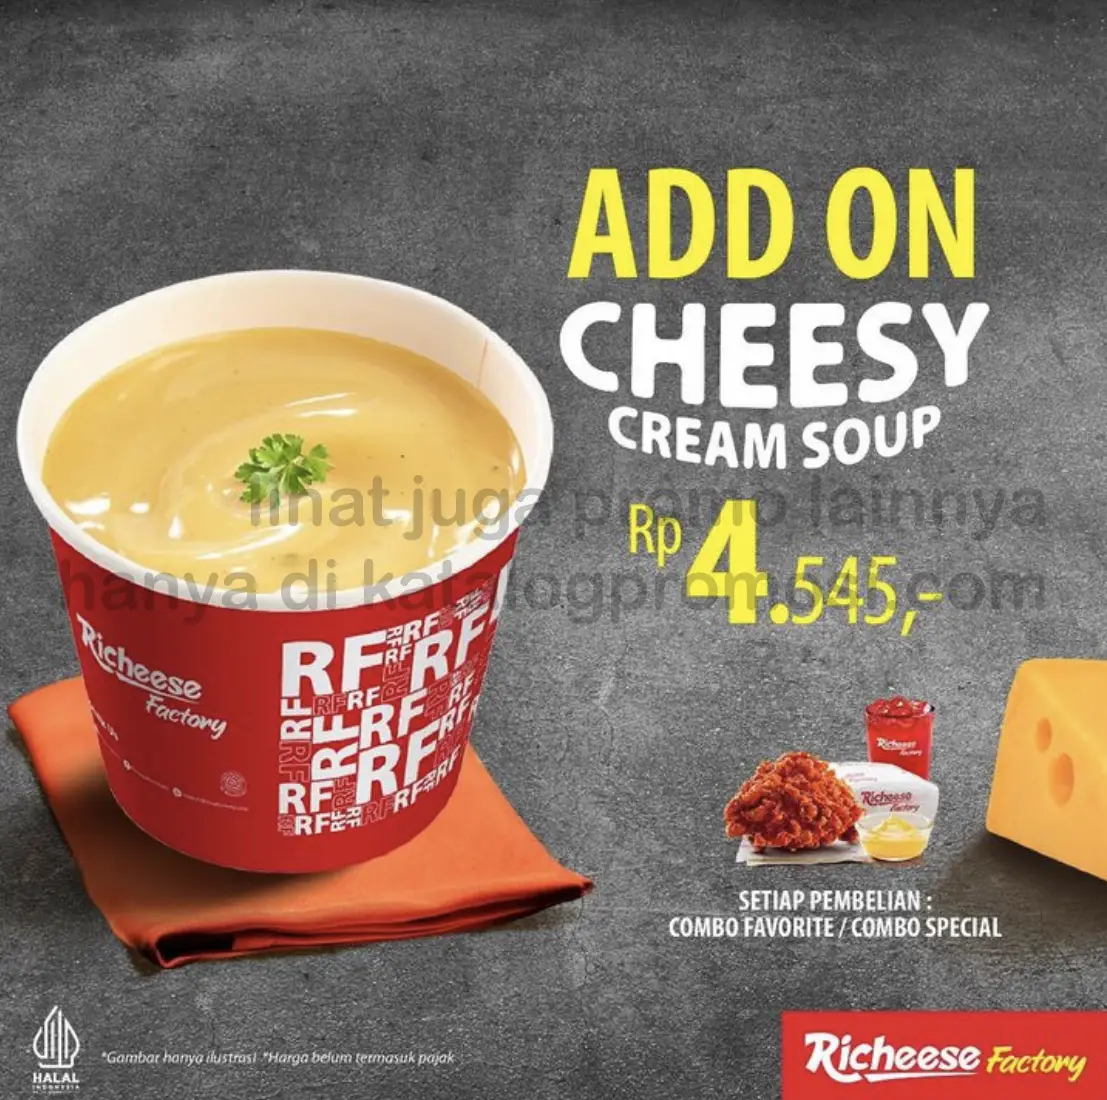 Promo RICHEESE FACTORY ADD ON Cheesy Cream Soup hanya Rp. 4.545